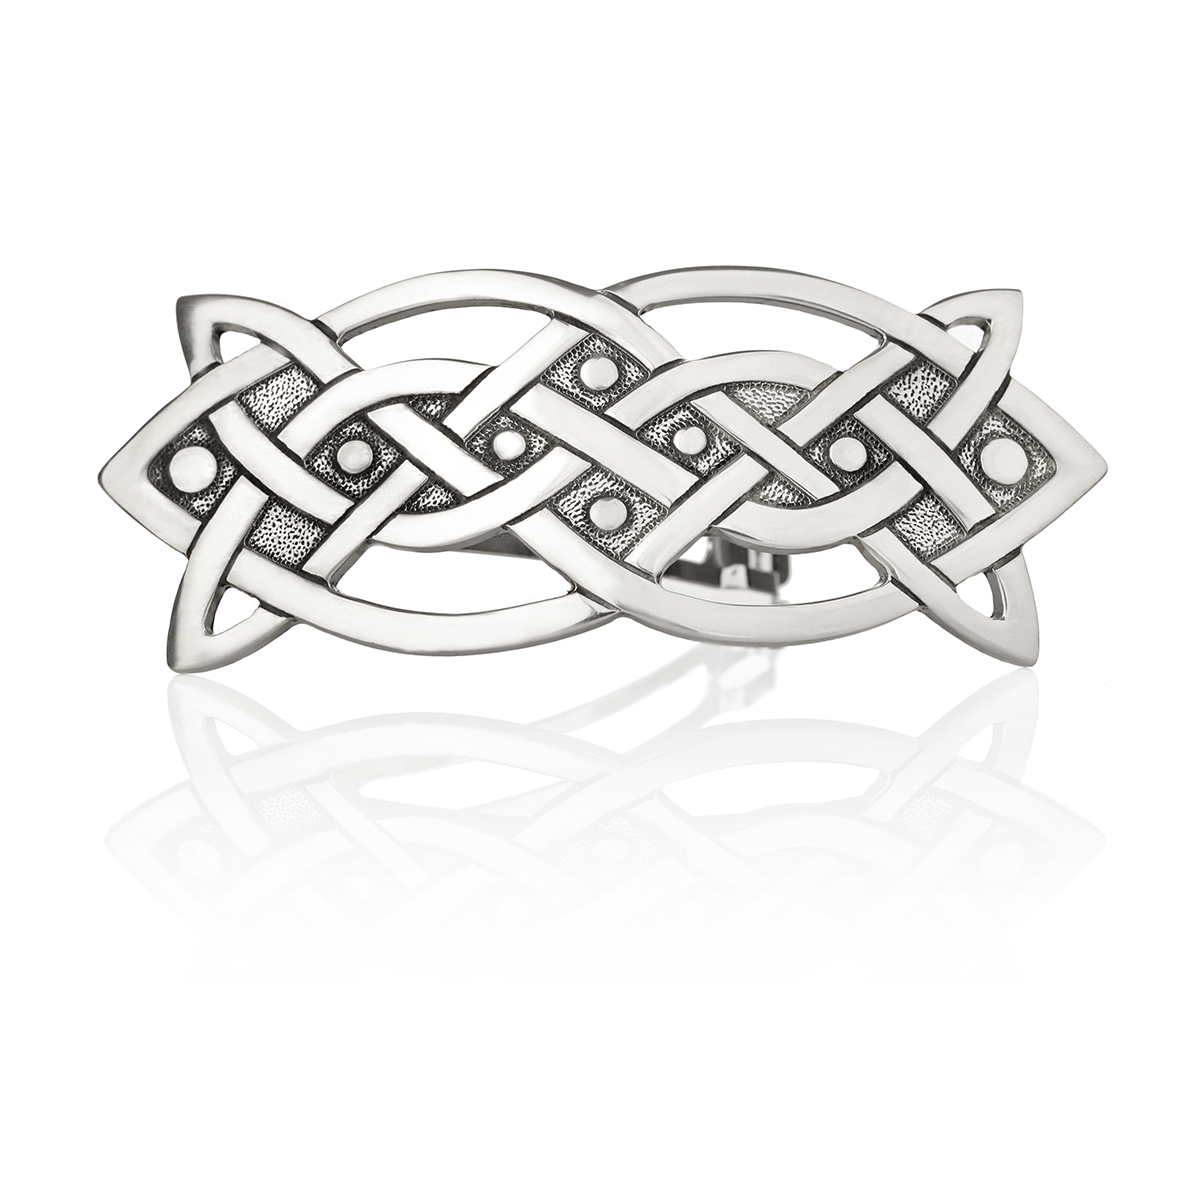 Infinite Celtic Knot - Haarspange aus England - keltische Knoten & Ornamente